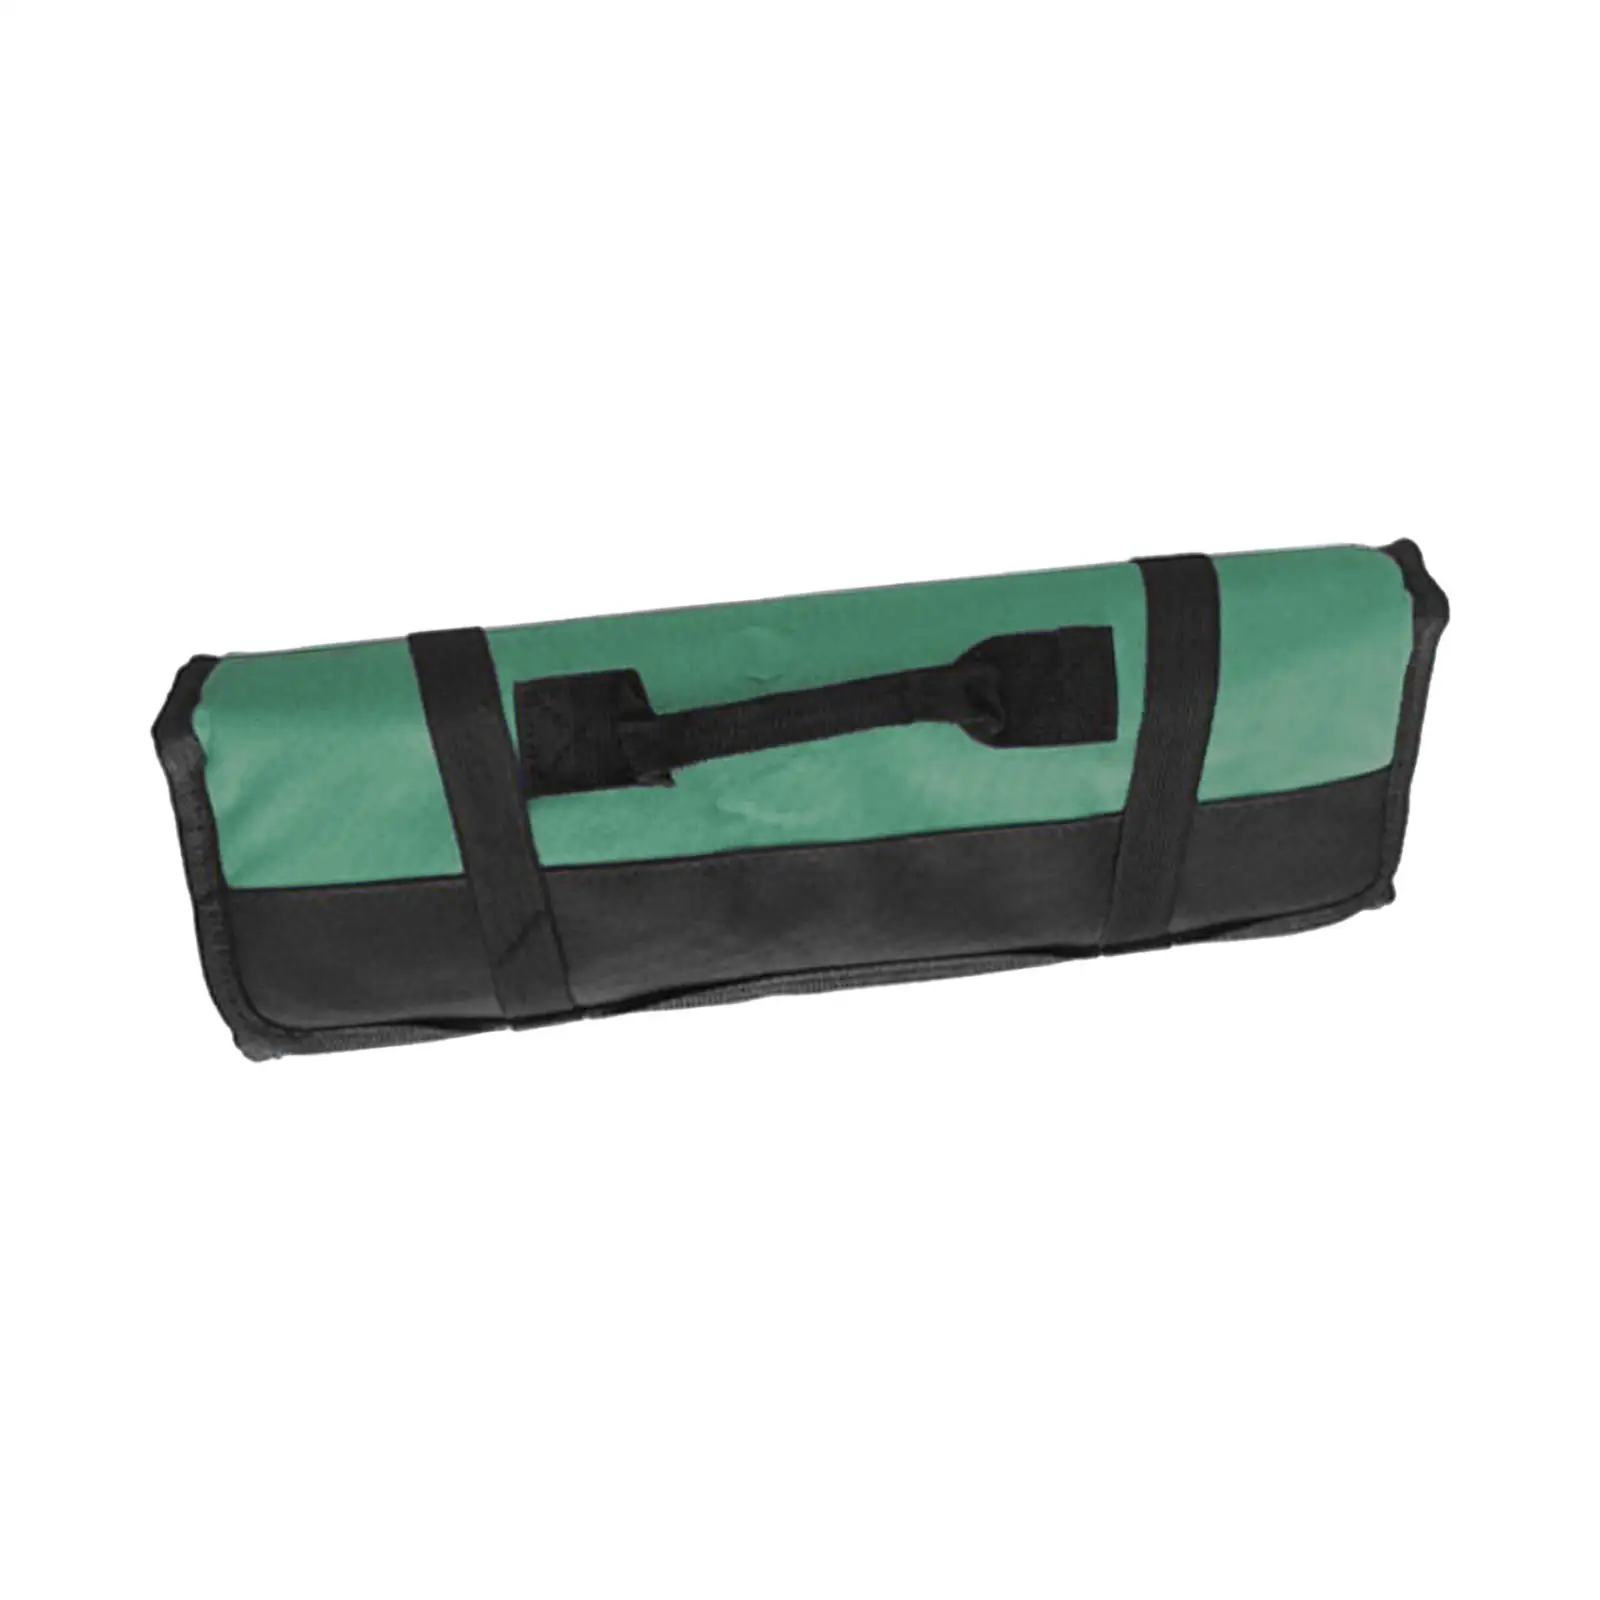 Tool Organizer Bag Versatile Oxford Cloth Tool Rolling Bag Tool Zipper Carrier Tote for Camping Gear Plumber Car Carpenter Gifts